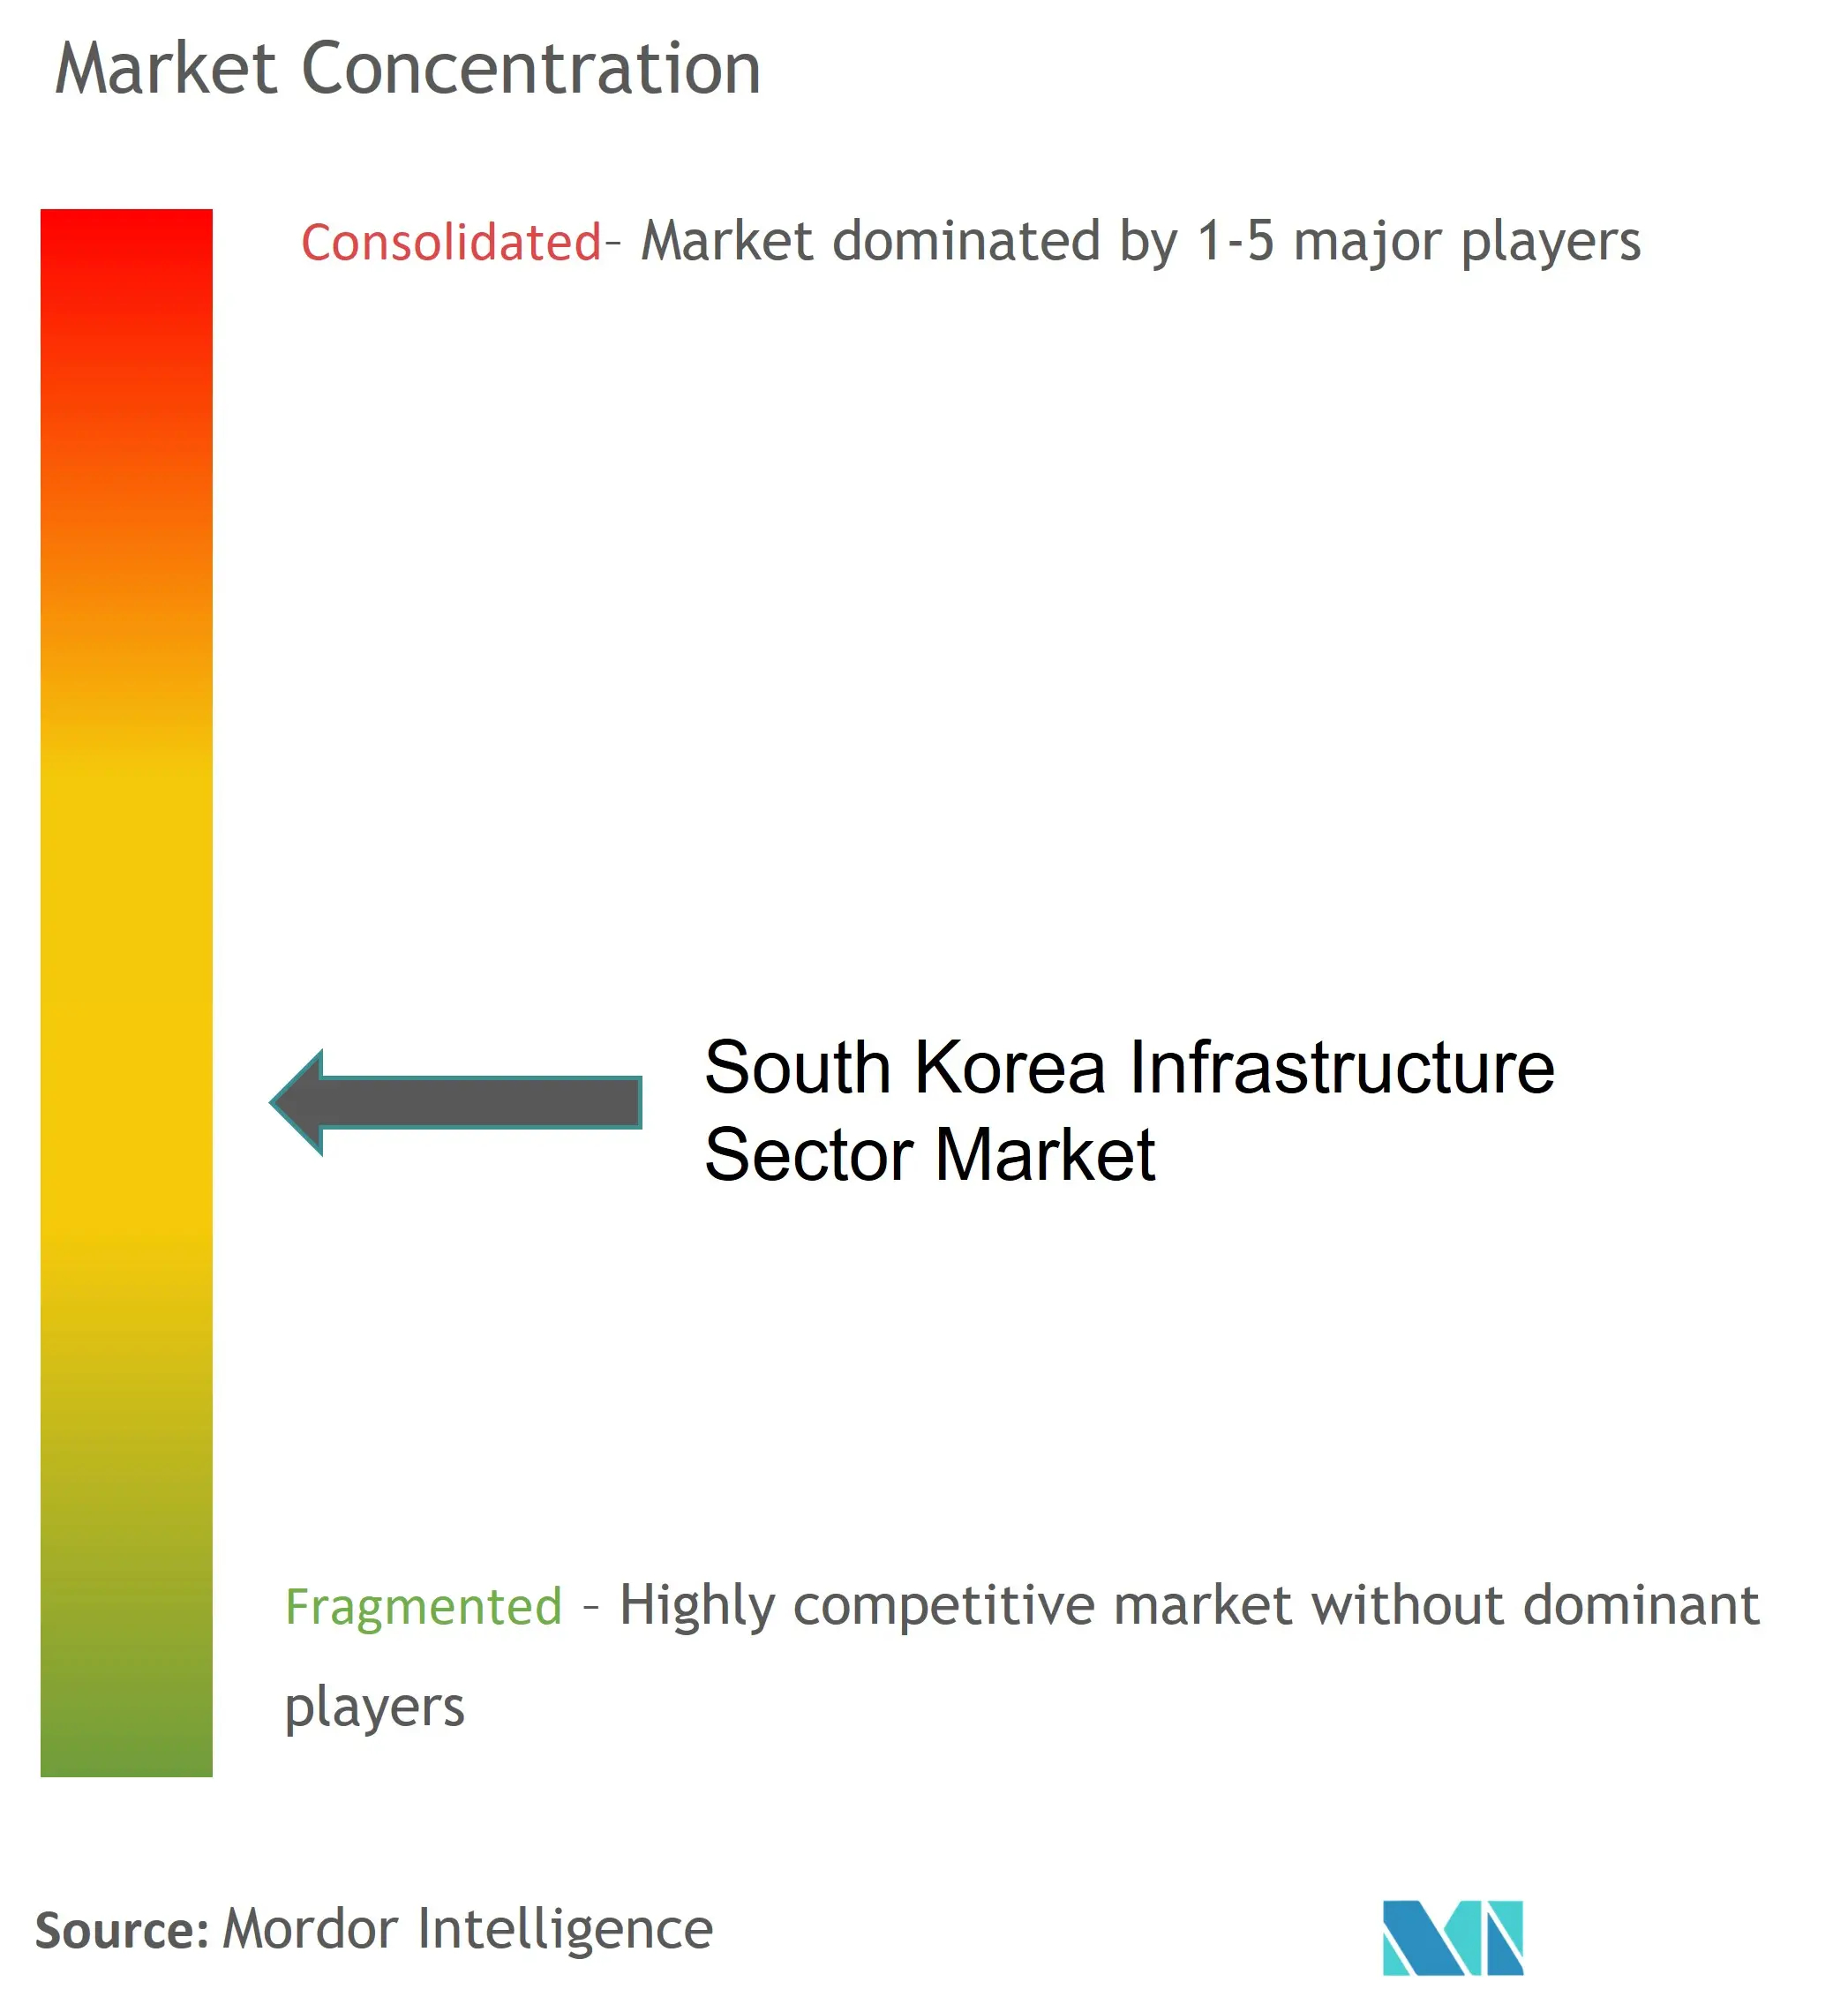 South Korea Infrastructure Market Concentration